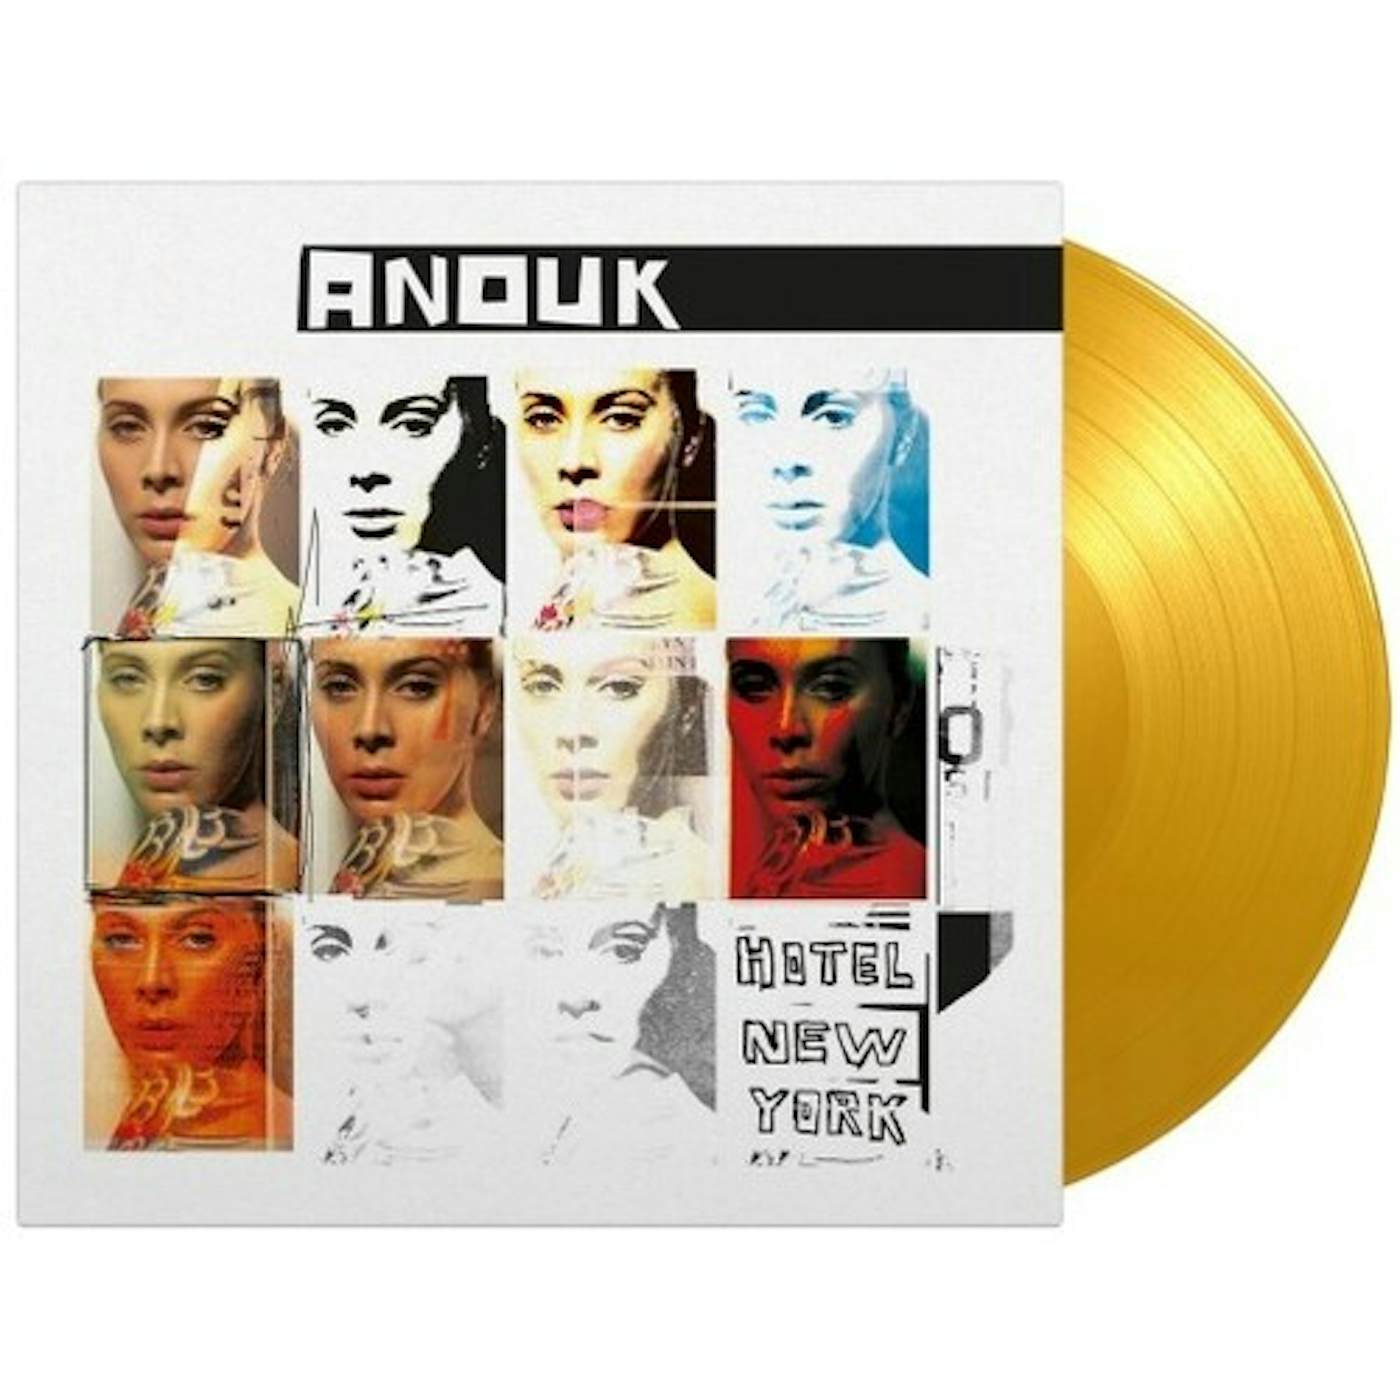 Anouk Hotel New York Vinyl Record